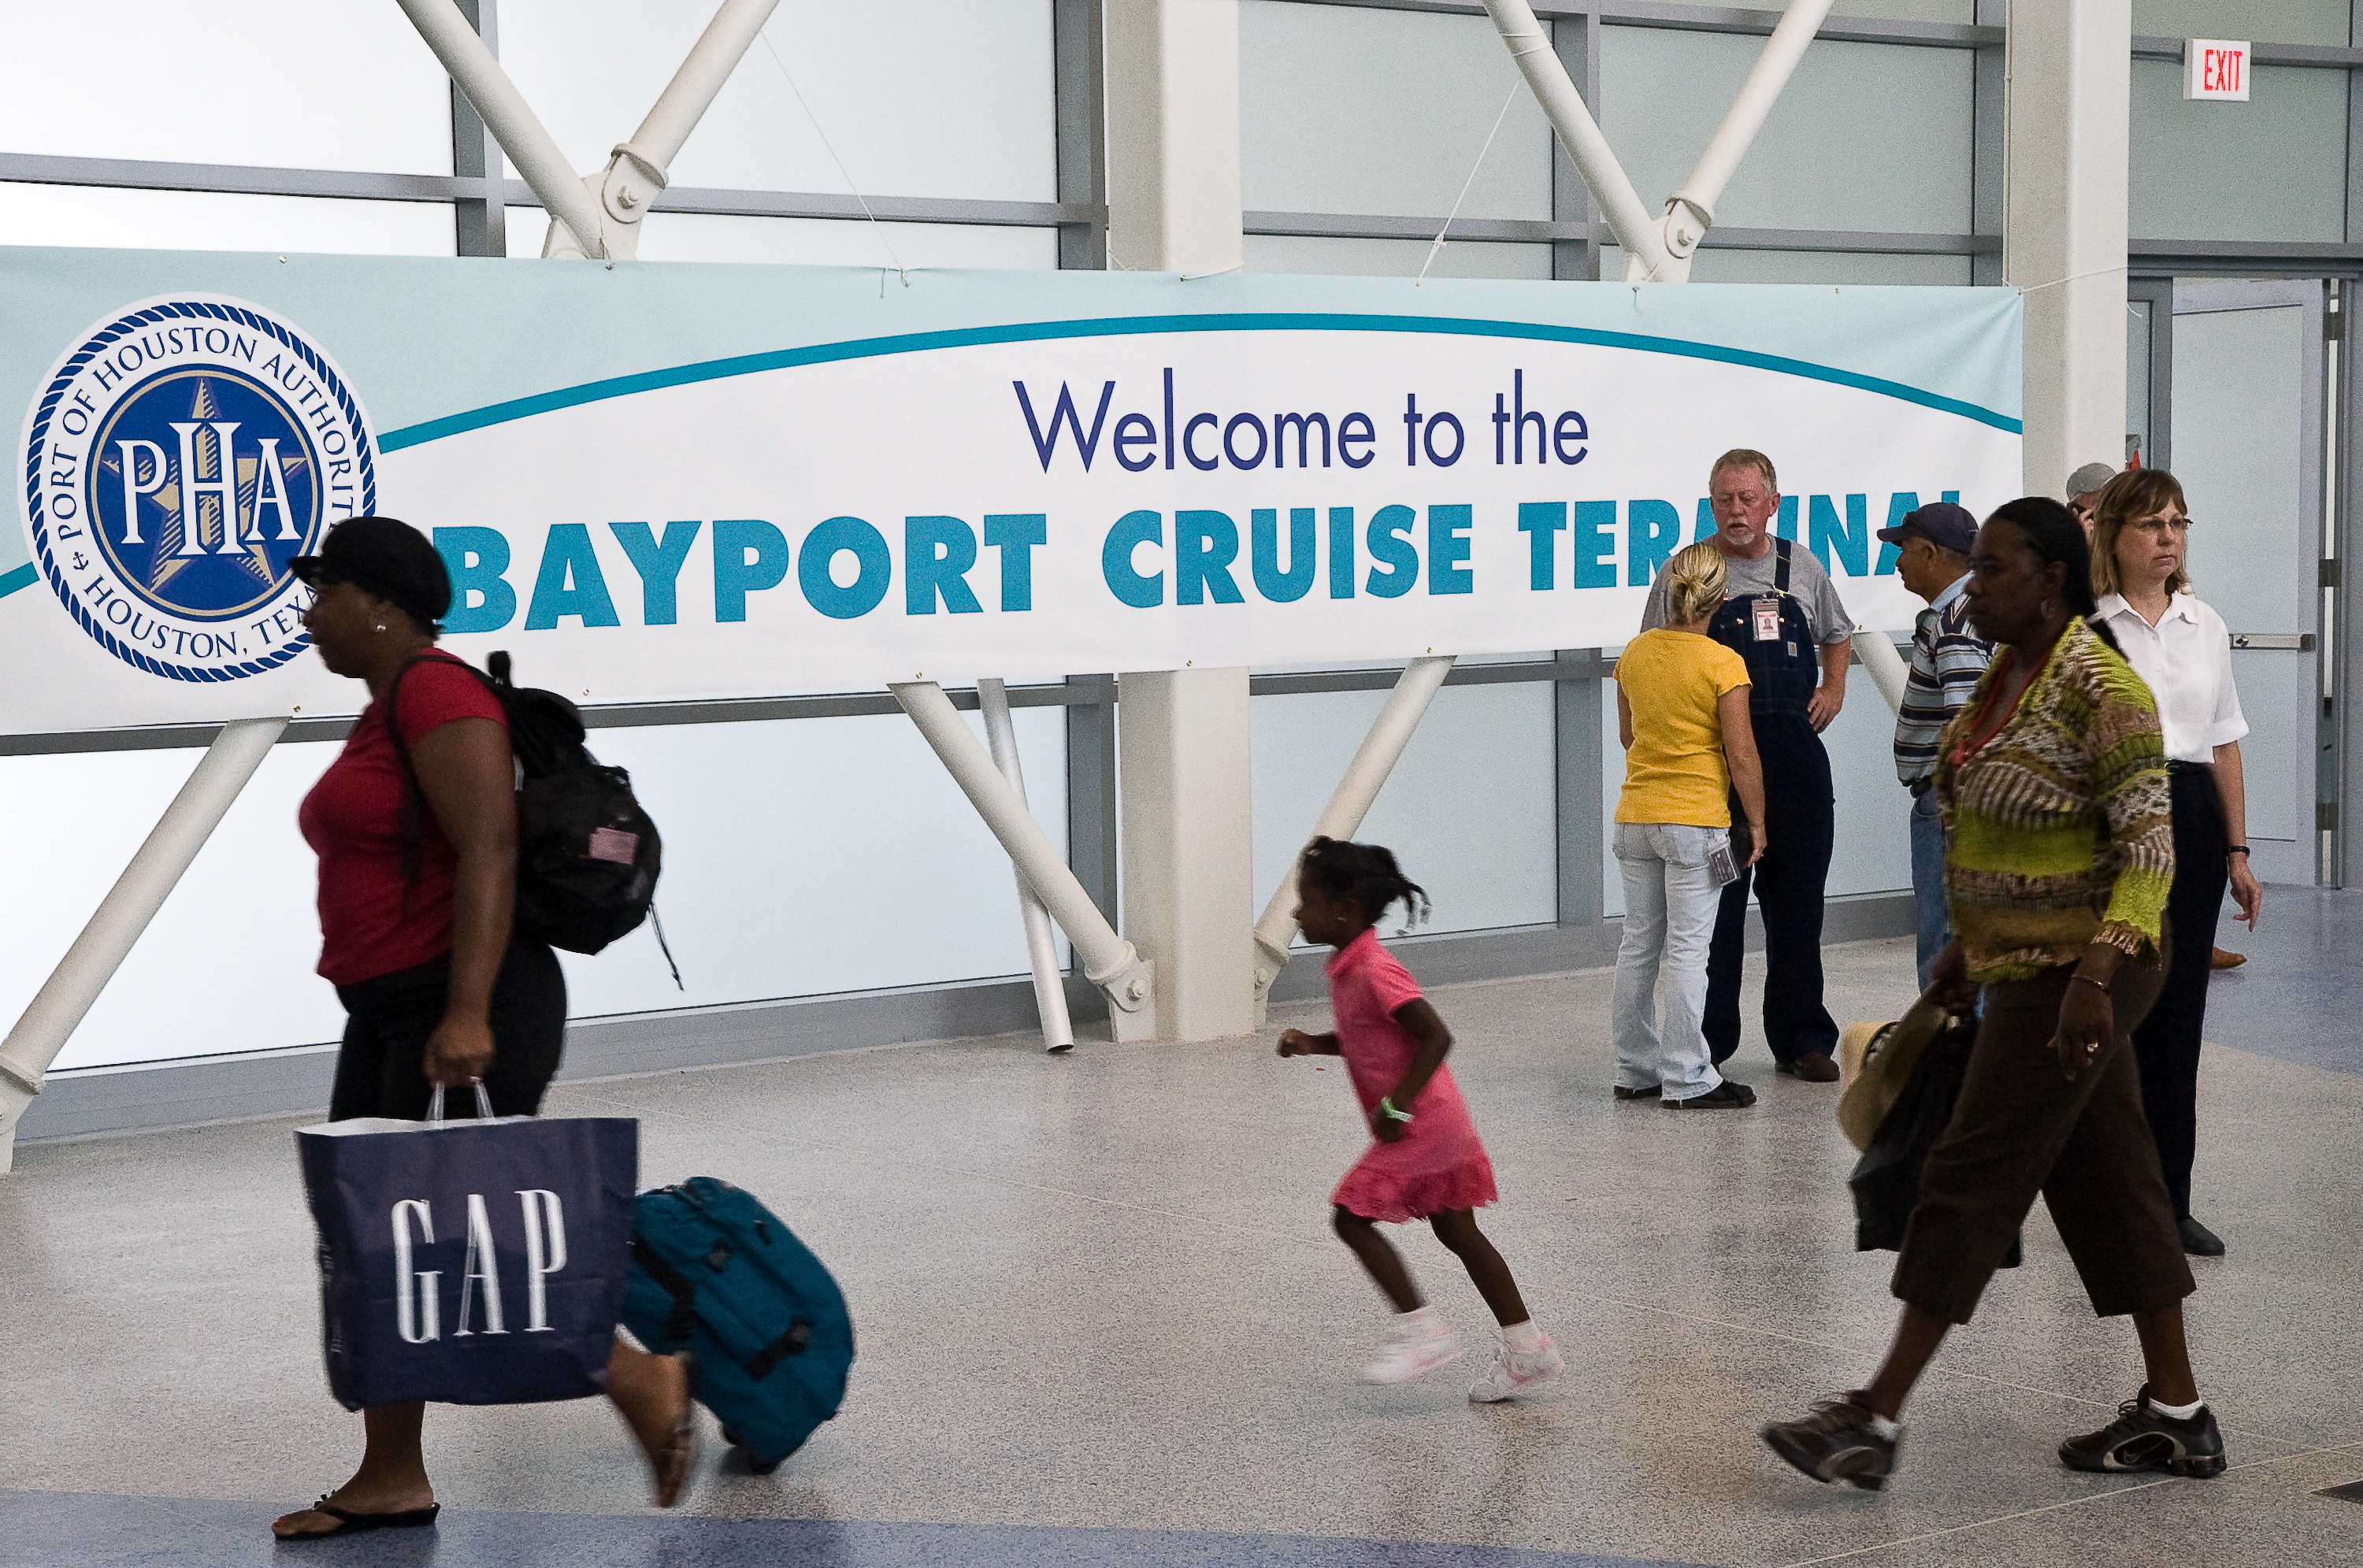 Bayport Cruise Terminal